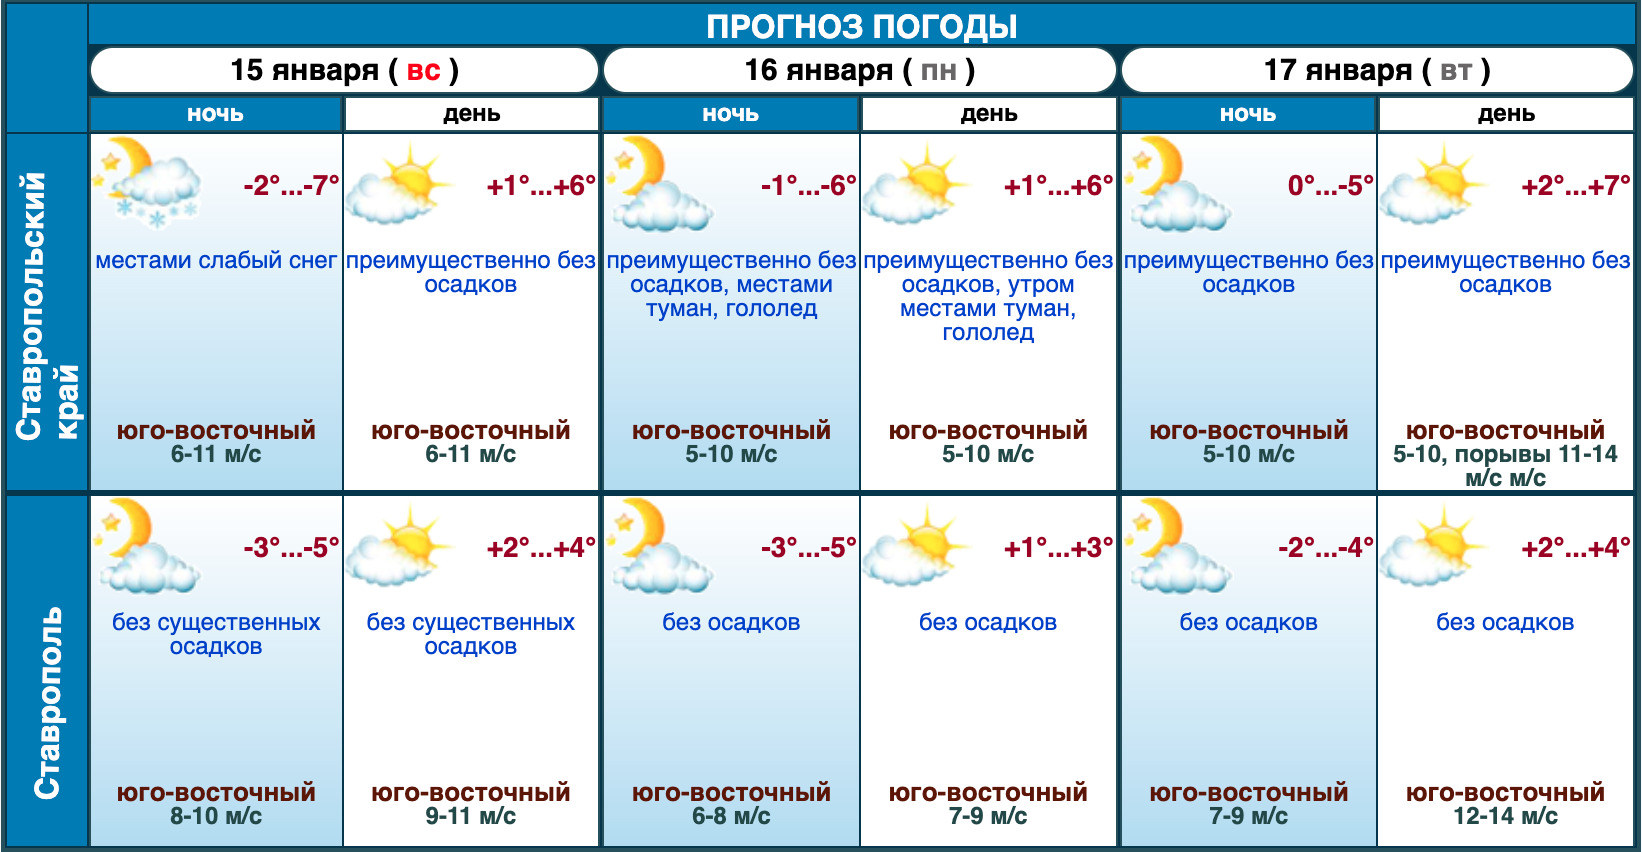 19 января температура. Гидрометцентр. Погода в Ставрополе. Погода в Ставрополе на 10 дней. Град прогноз погоды.